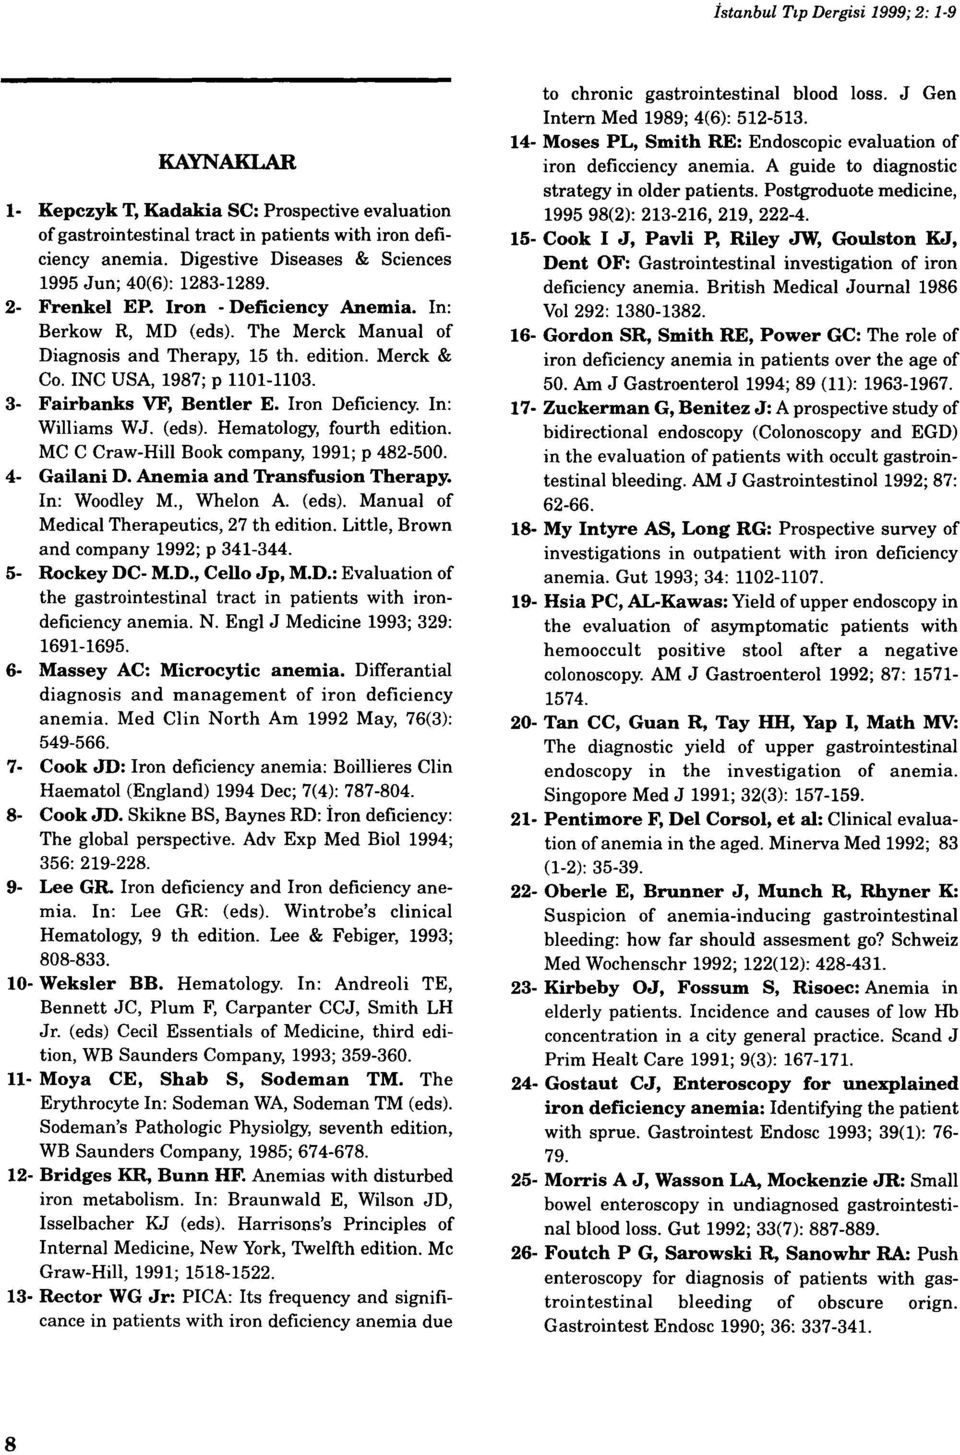 INC USA, 1987; p 1101-1103. 3- Fairbanks VF, Bentler E. Iron Deficiency. In: Williams WJ. (eds). Hematology, fourth edition. MC C Craw-Hill Book company, 1991; p 482-500. 4- Gailani D.